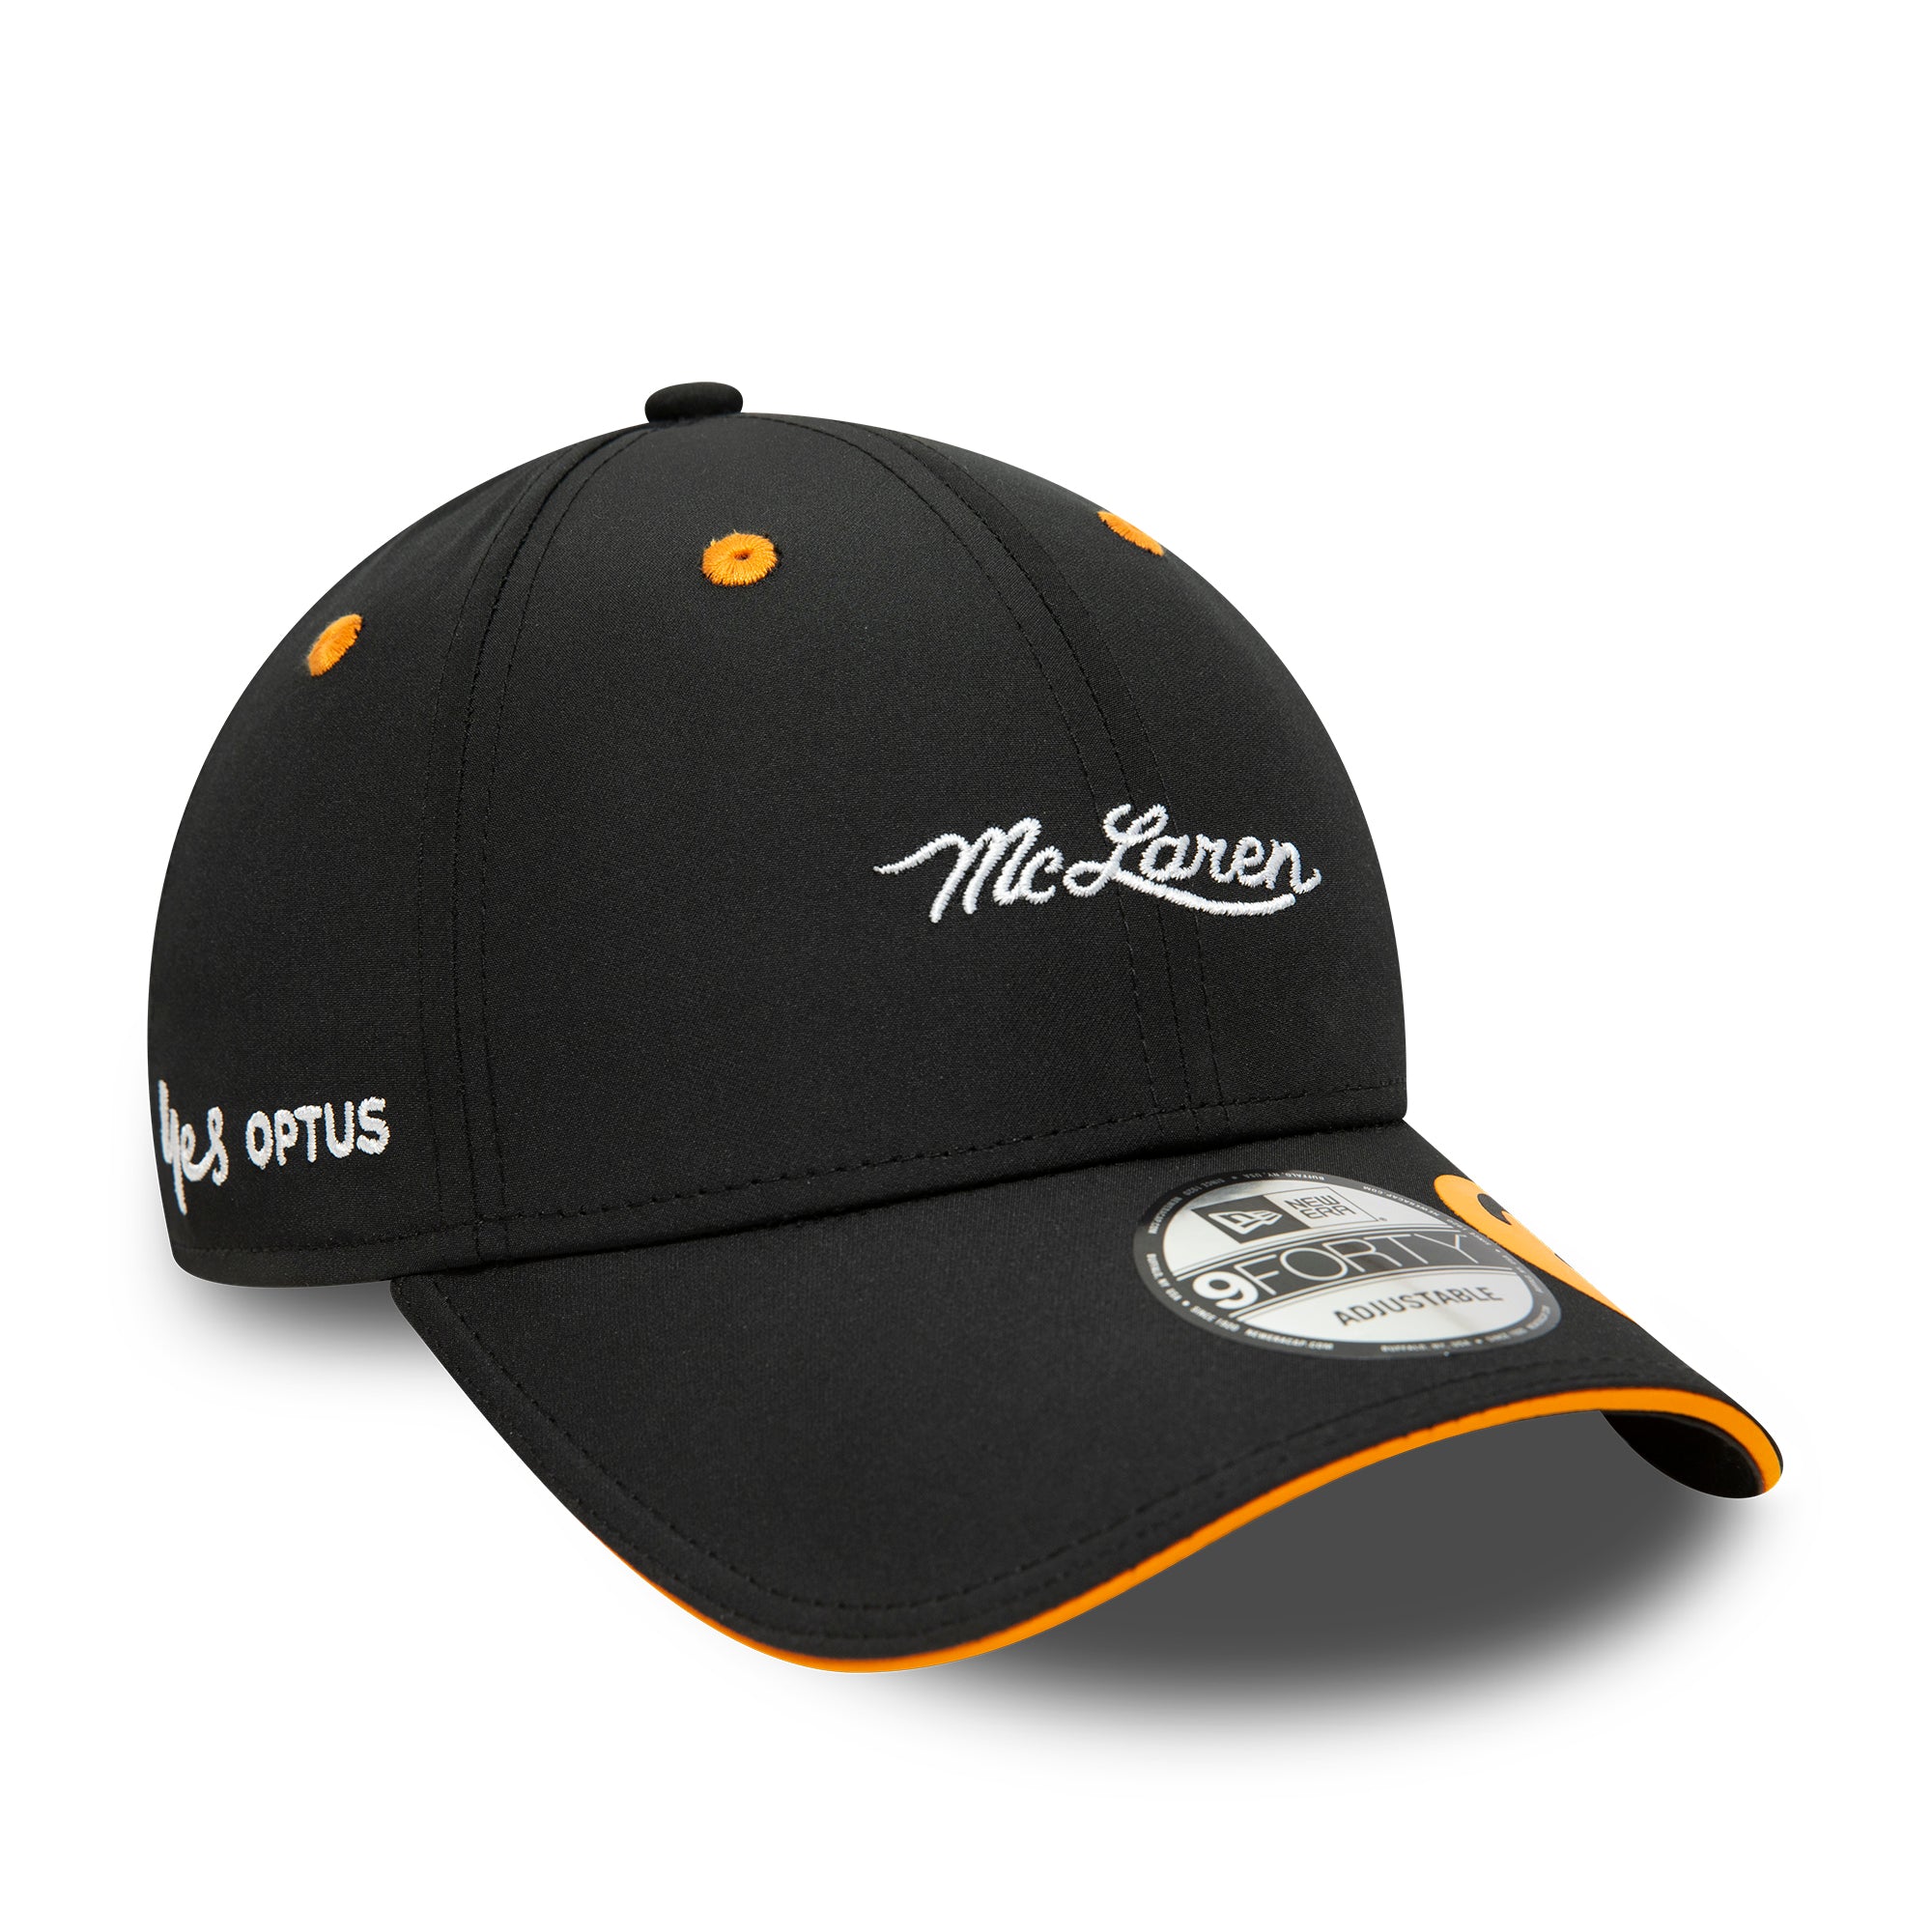 McLaren F1 Adult Special Edition Monaco GP Daniel Ricciardo Hat Black